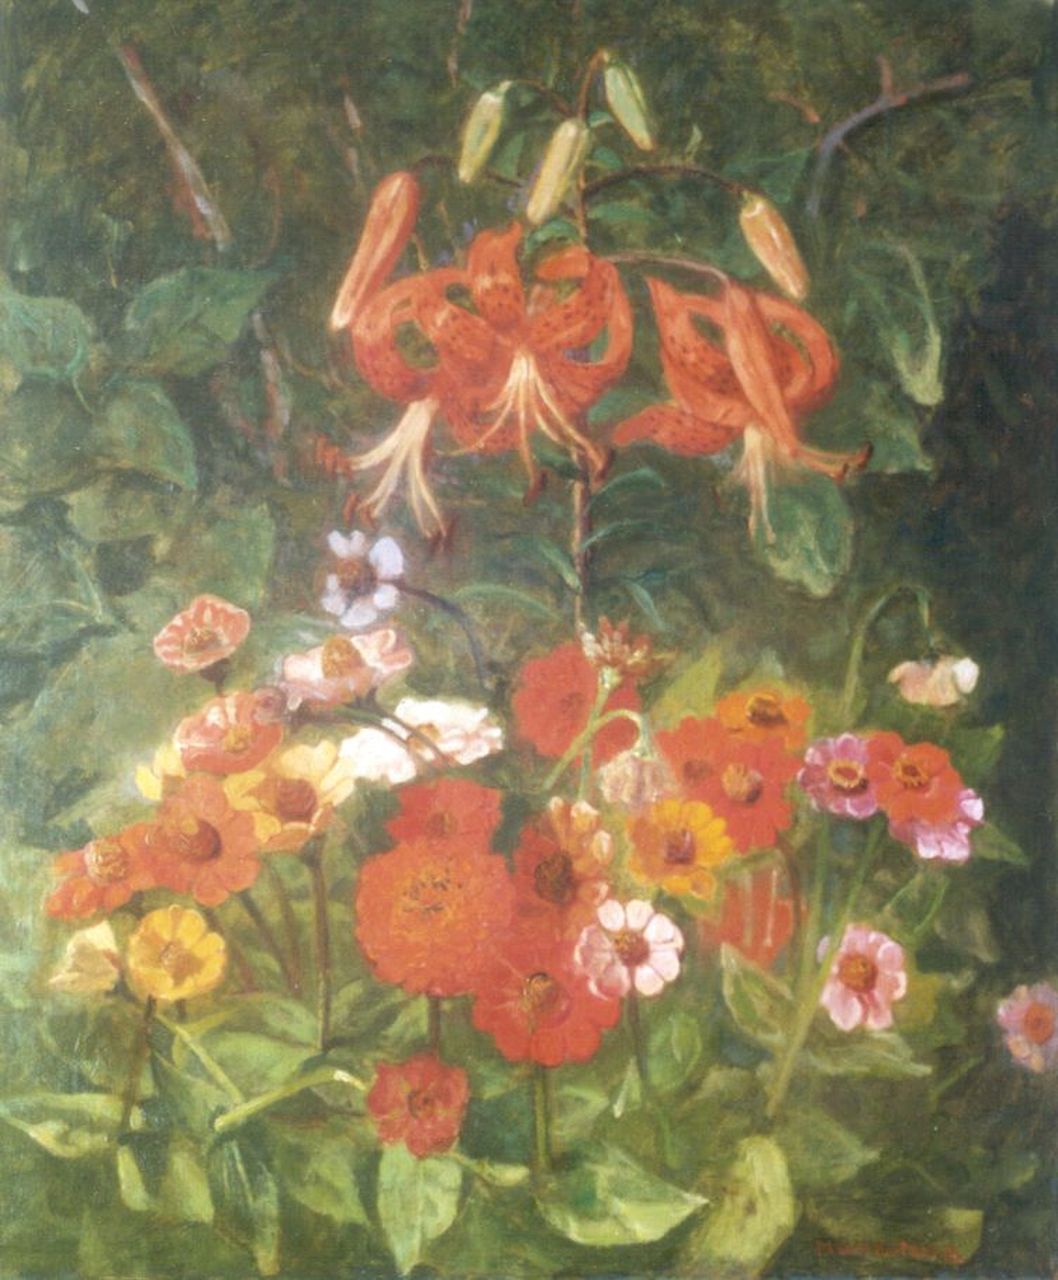 Wandscheer M.W.  | Maria Wilhelmina 'Marie' Wandscheer, Lilies and zinnias, Öl auf Leinwand 65,5 x 56,6 cm, signed l.r. and on stretcher